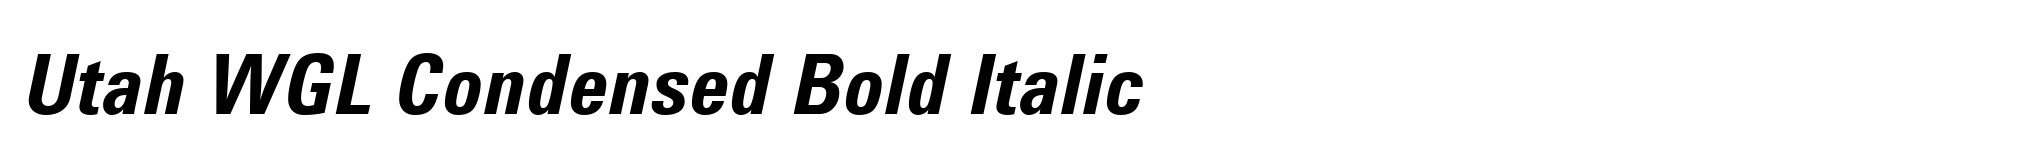 Utah WGL Condensed Bold Italic image